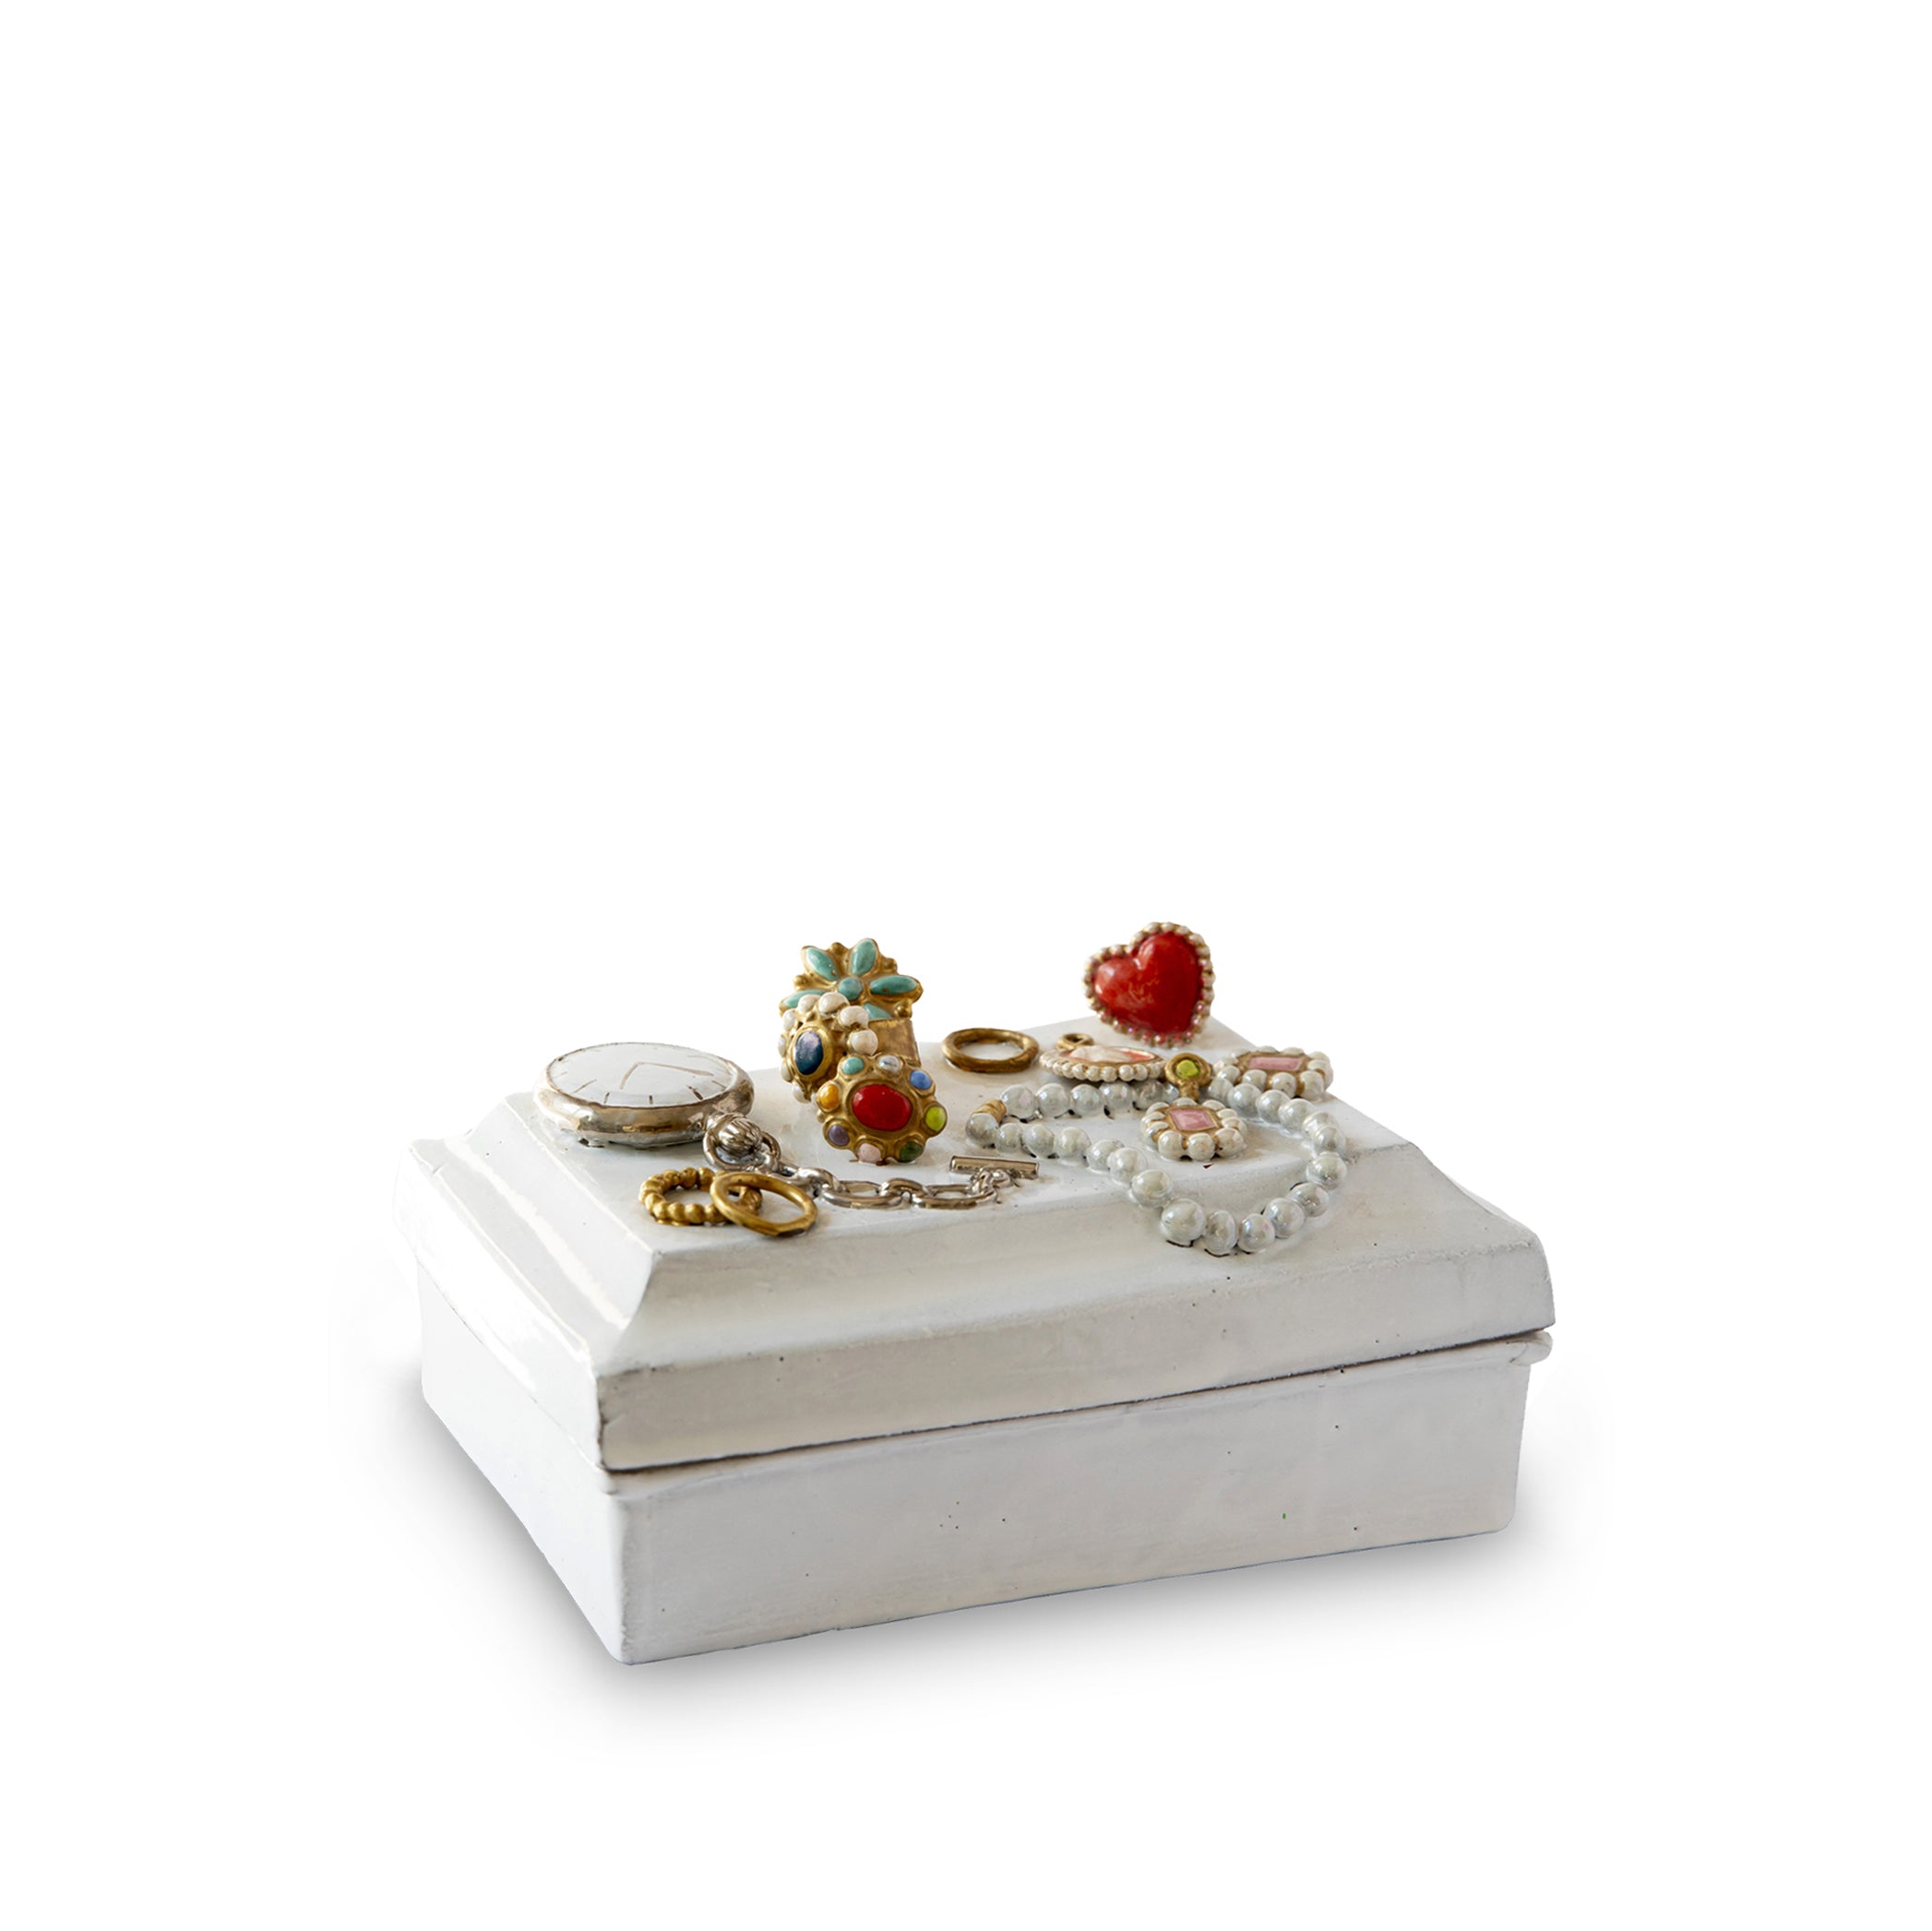 Serena Jewelry Box by Astier de Villatte, 20cm